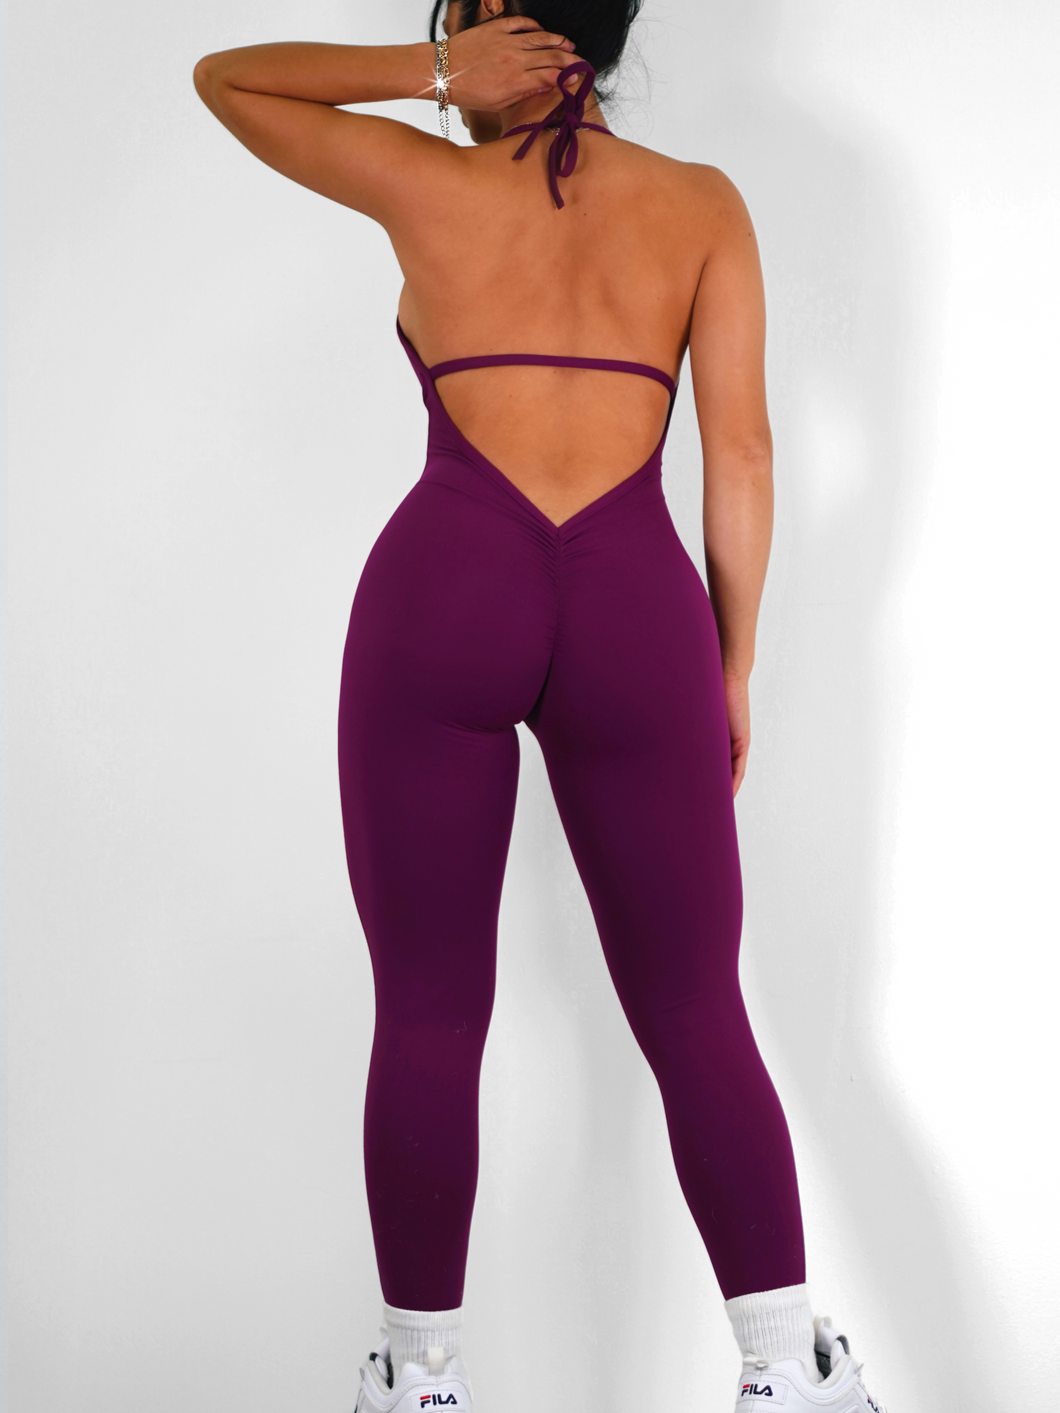 Low Back Scrunch Jumpsuit Romper (Plum Purple)